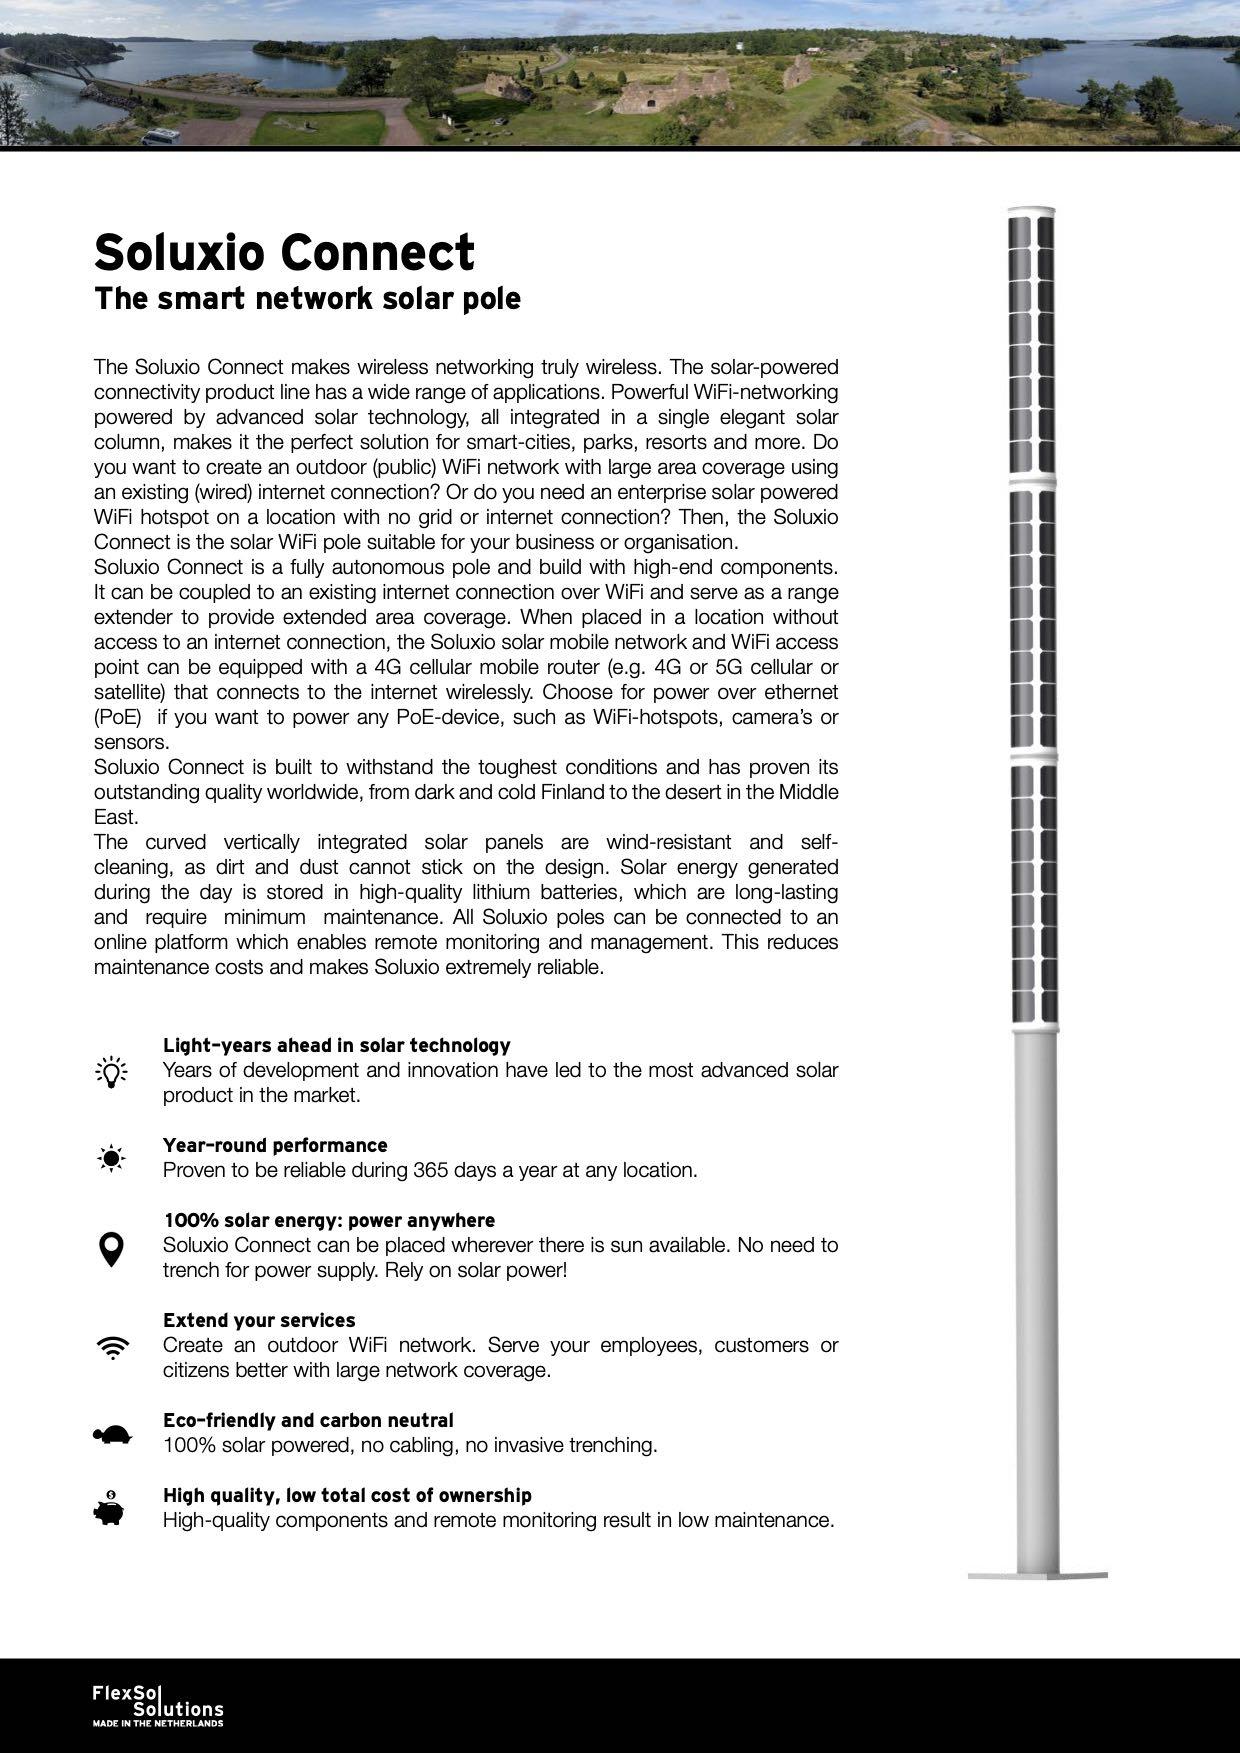 Soluxio Connect wifi hotspot leaflet